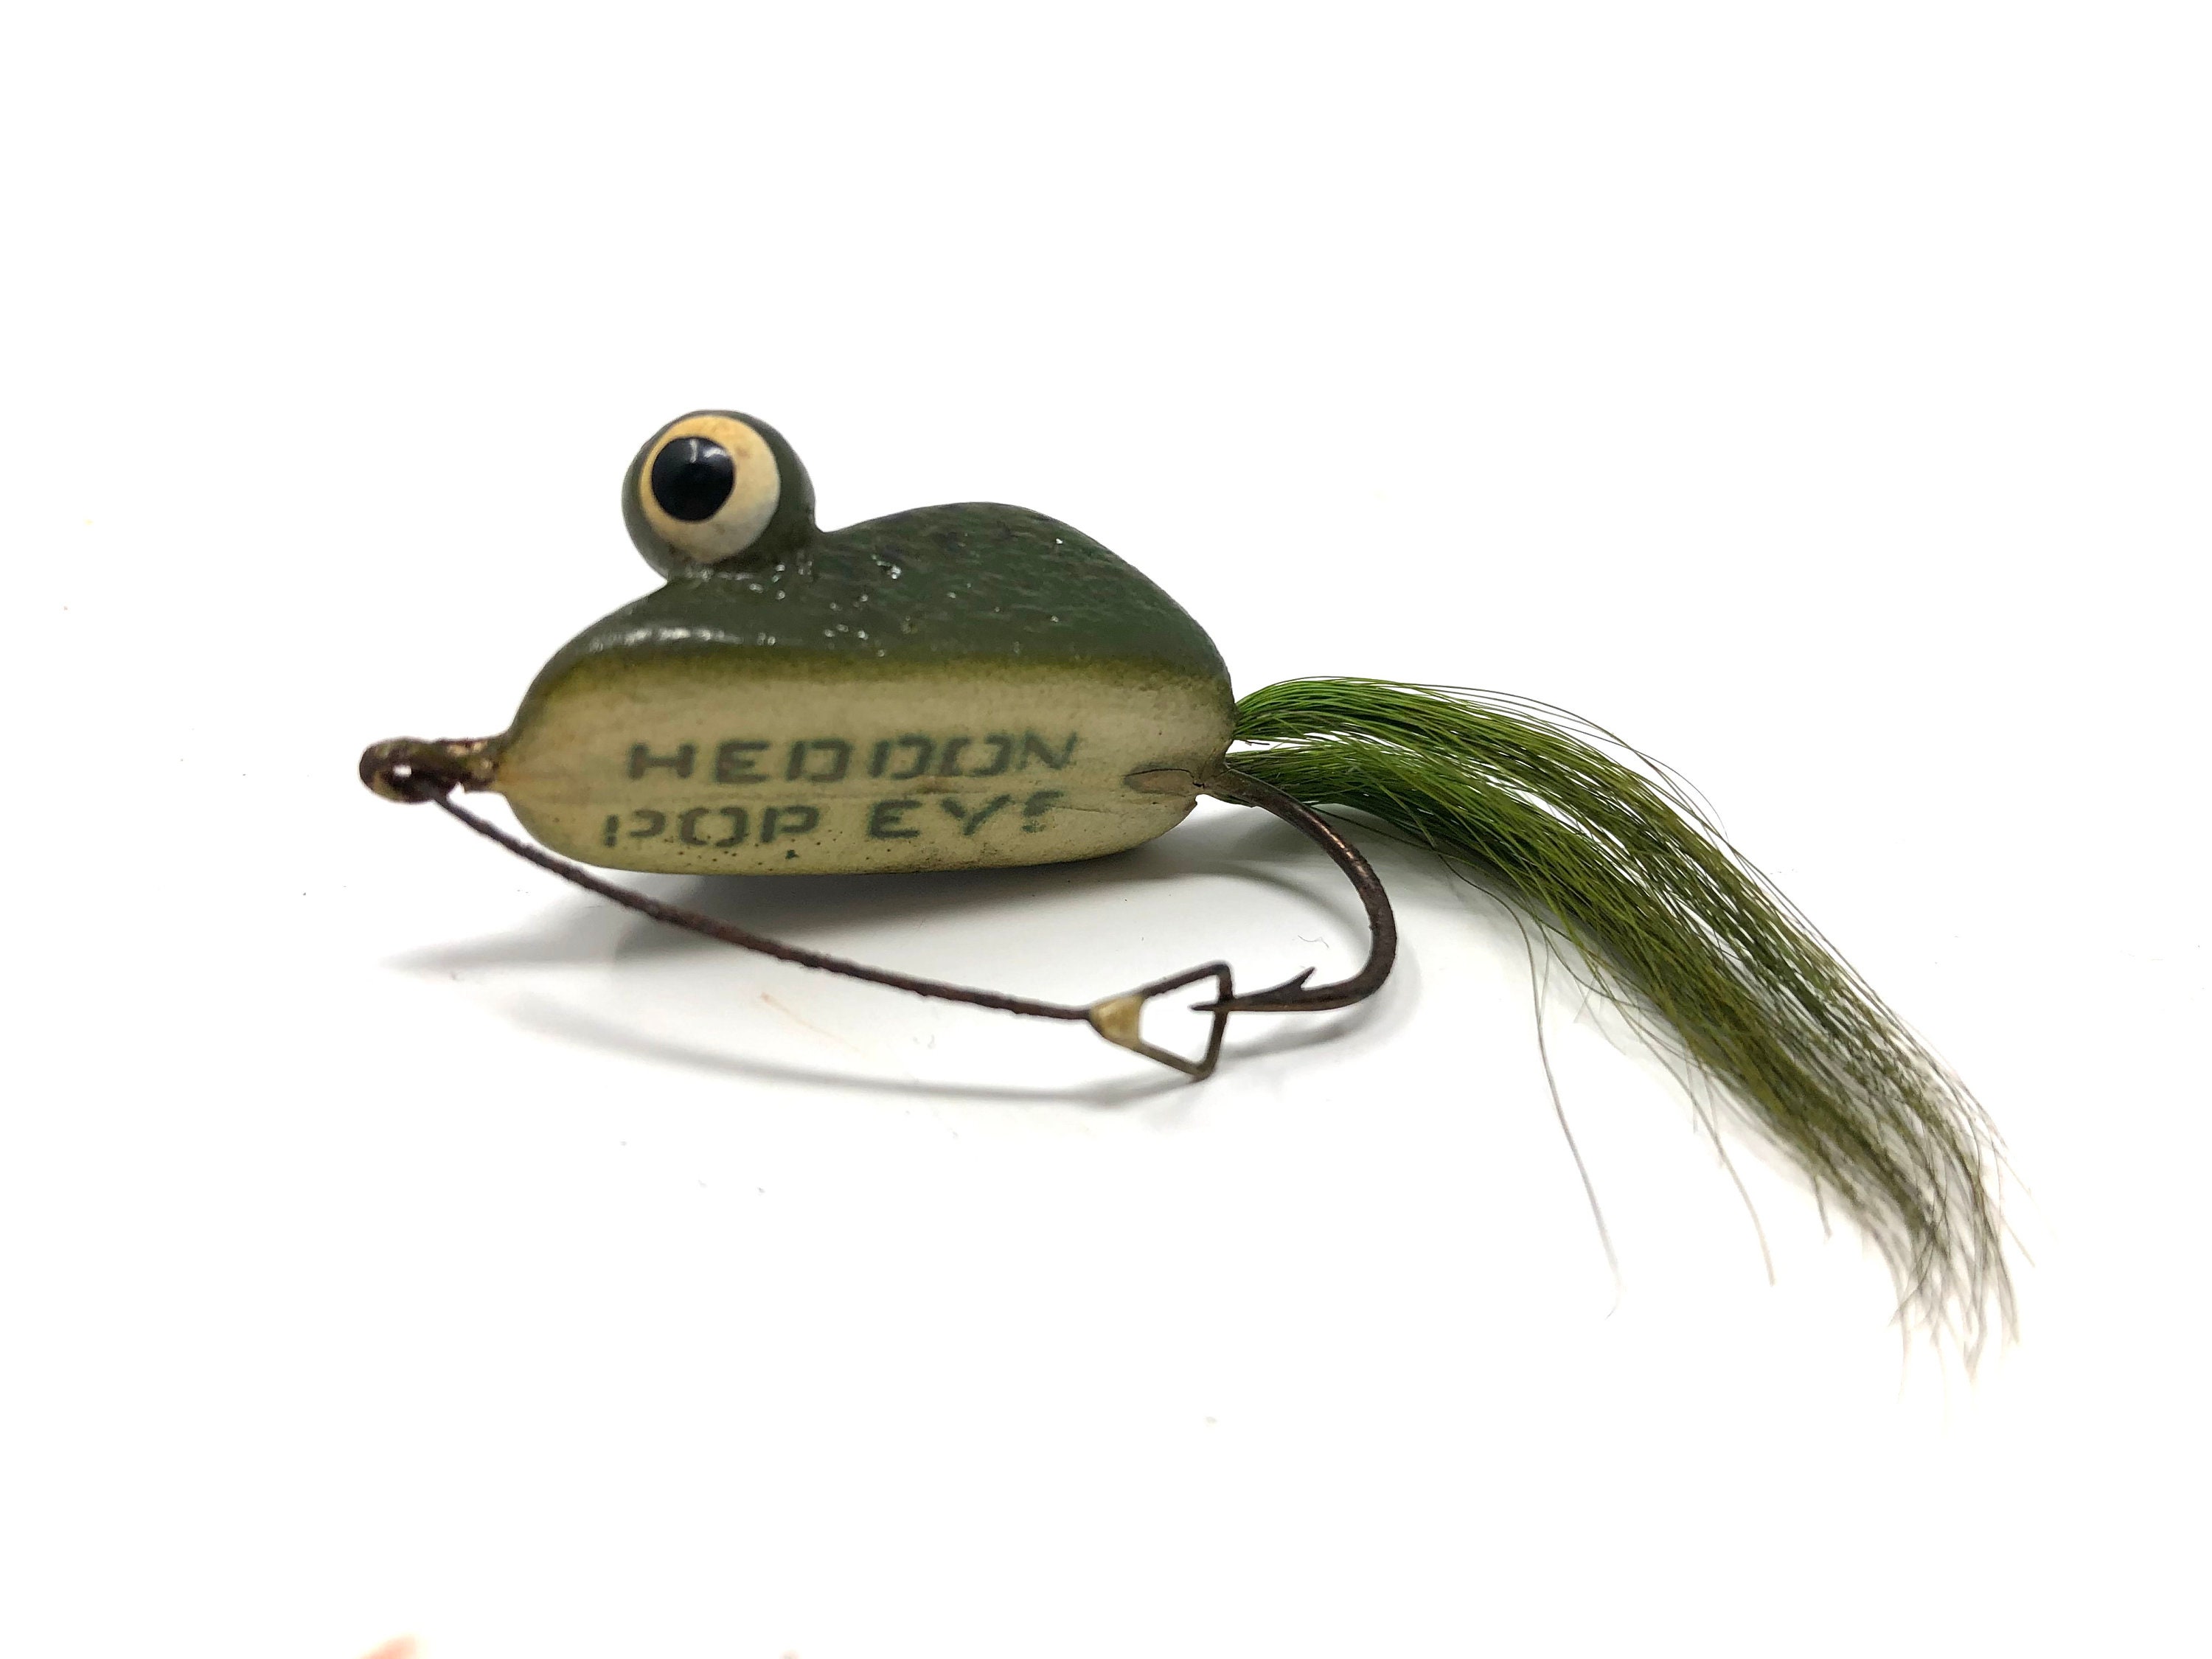 Vintage Heddon Pop Eye Frog Minty Fly Rod Lure / Antique Fly Rod Lure Frog  Minty Heddon Pop Eye -  Australia